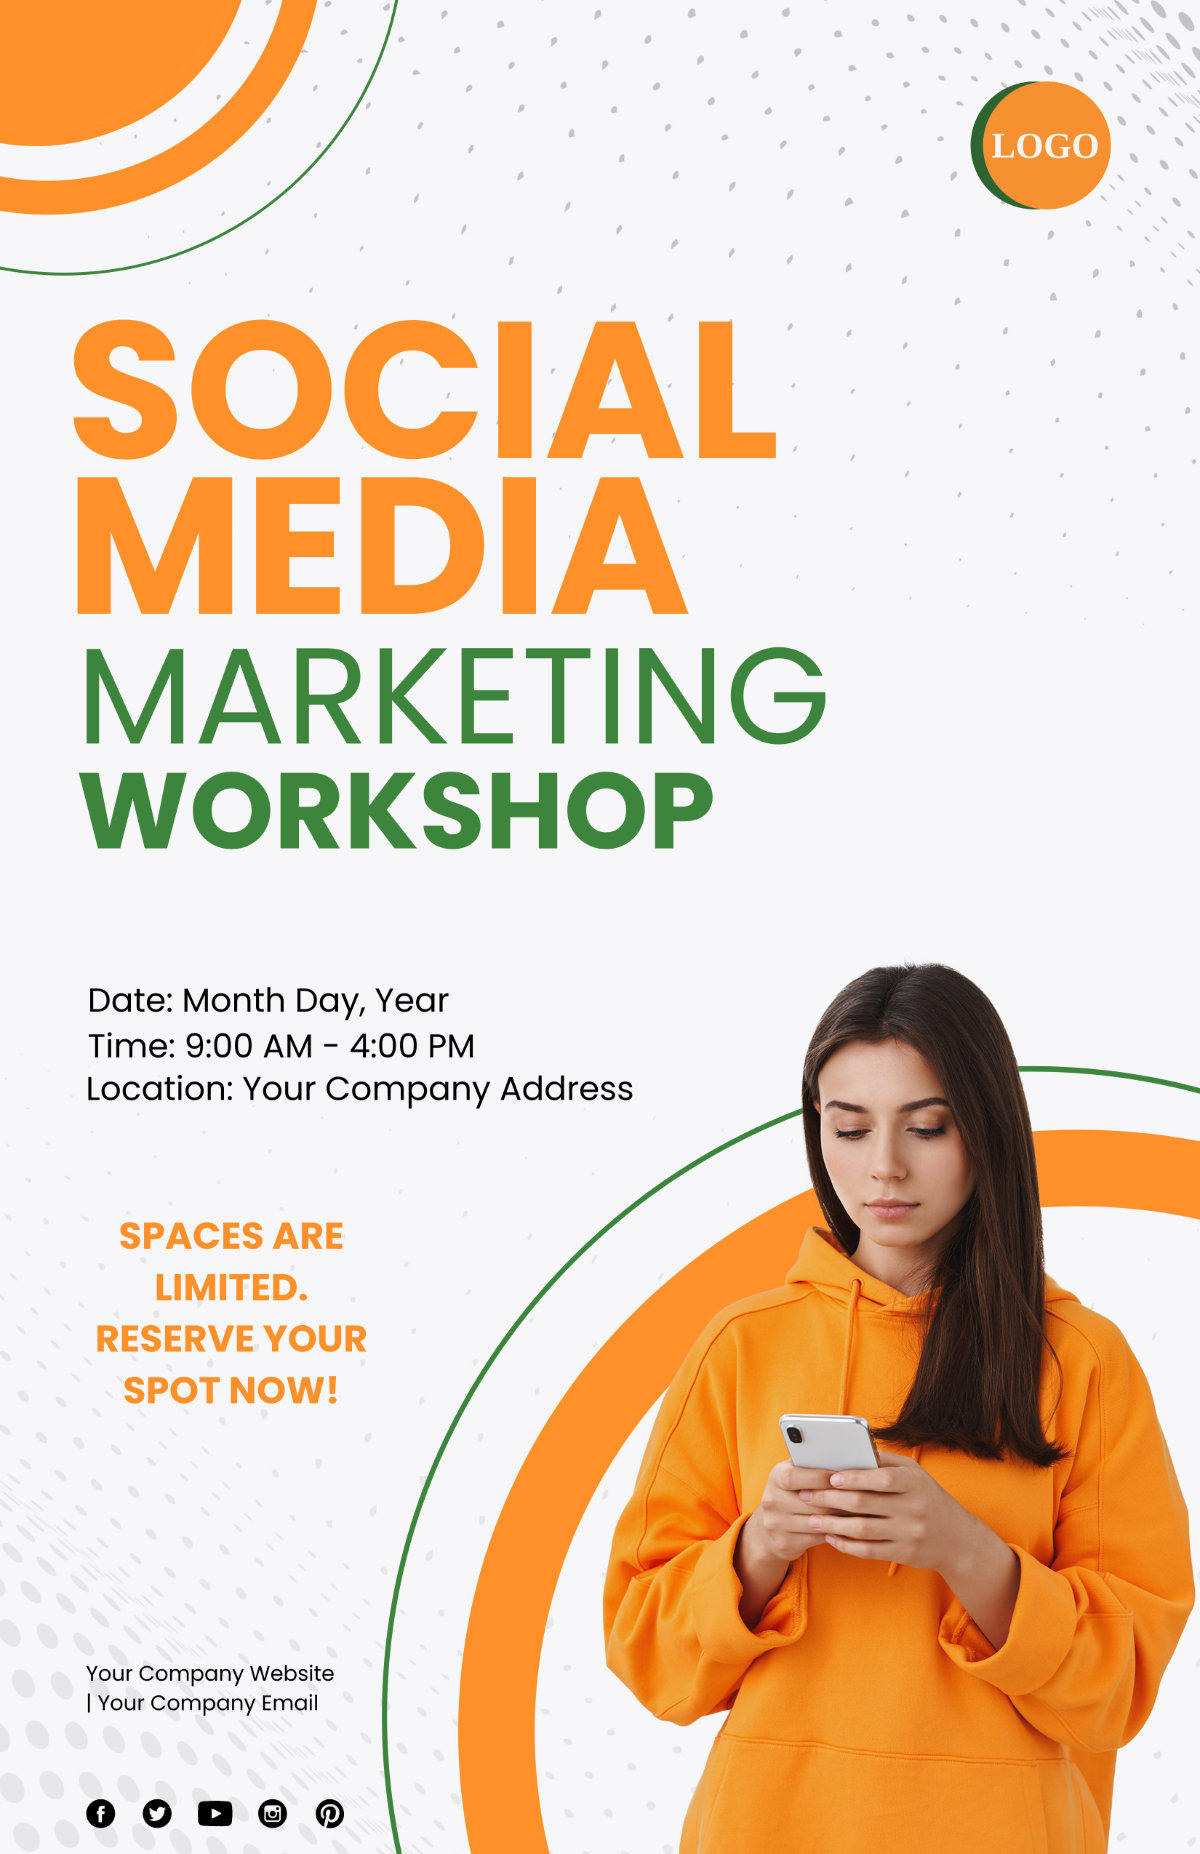 Social Media Marketing Workshop Poster Template